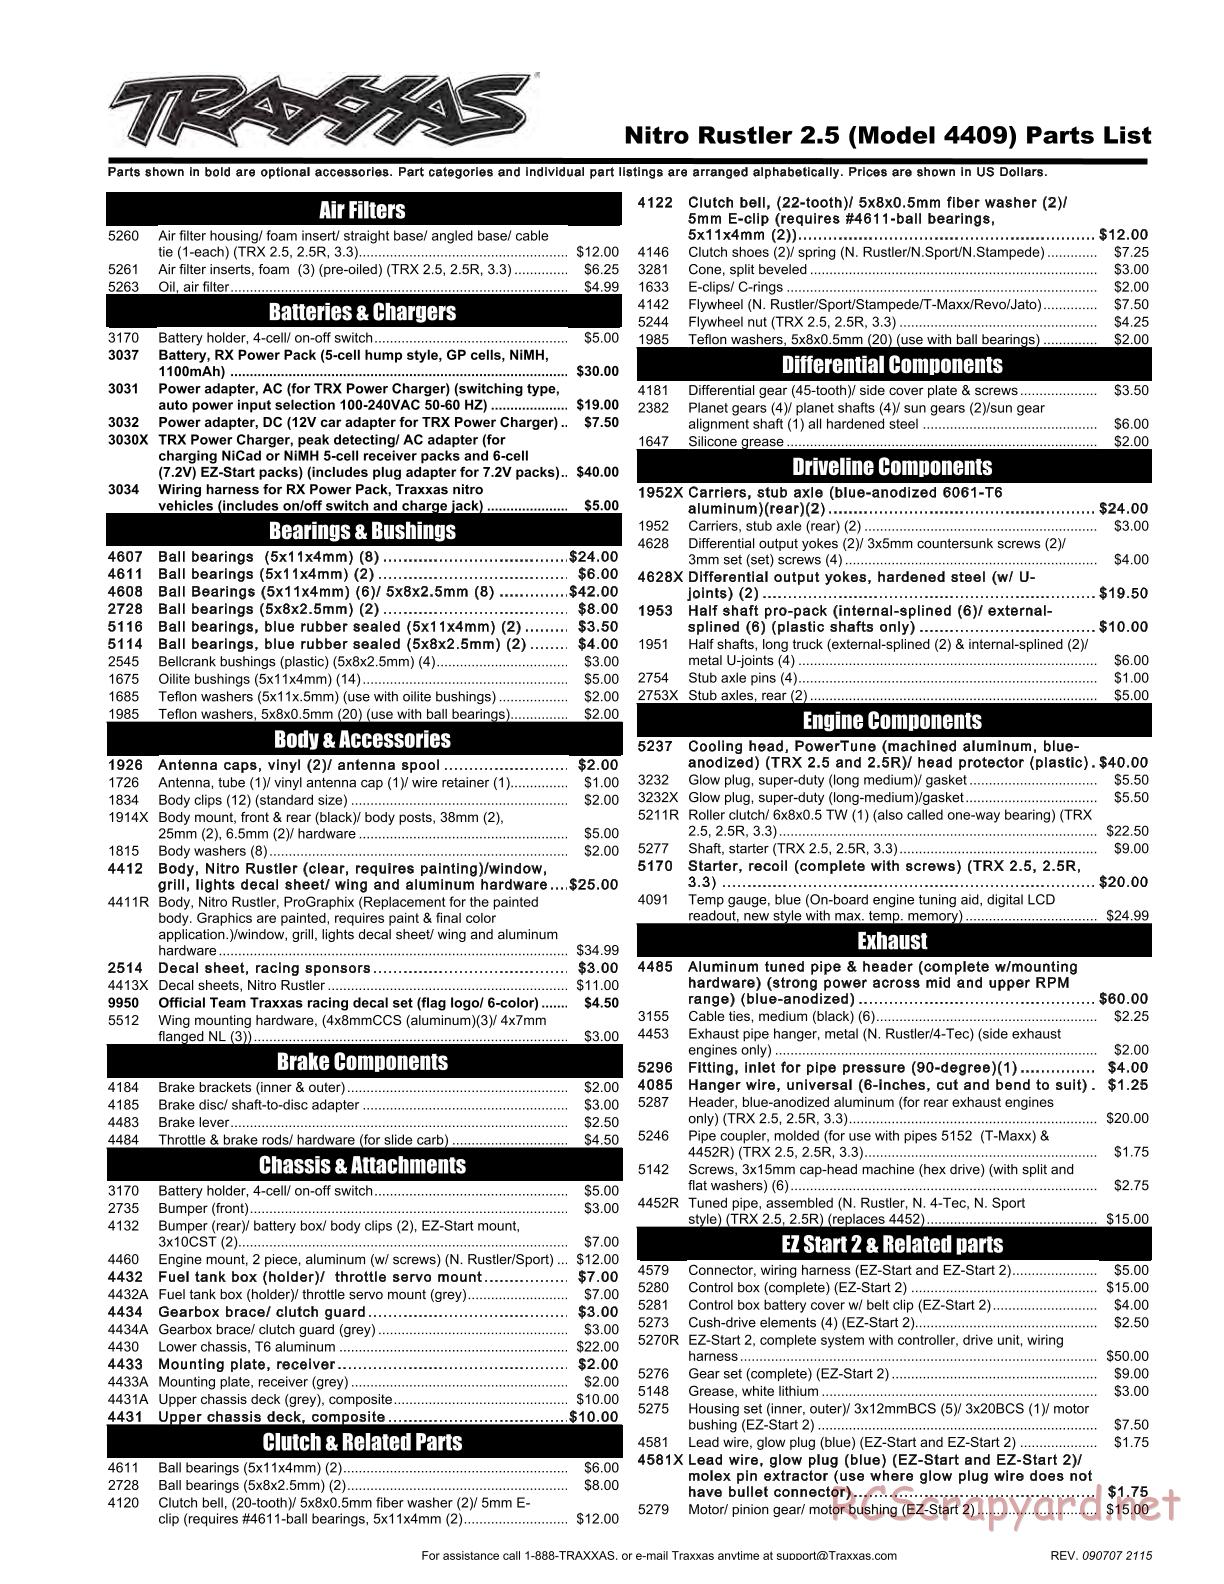 Traxxas - Nitro Rustler (2012) - Parts List - Page 1